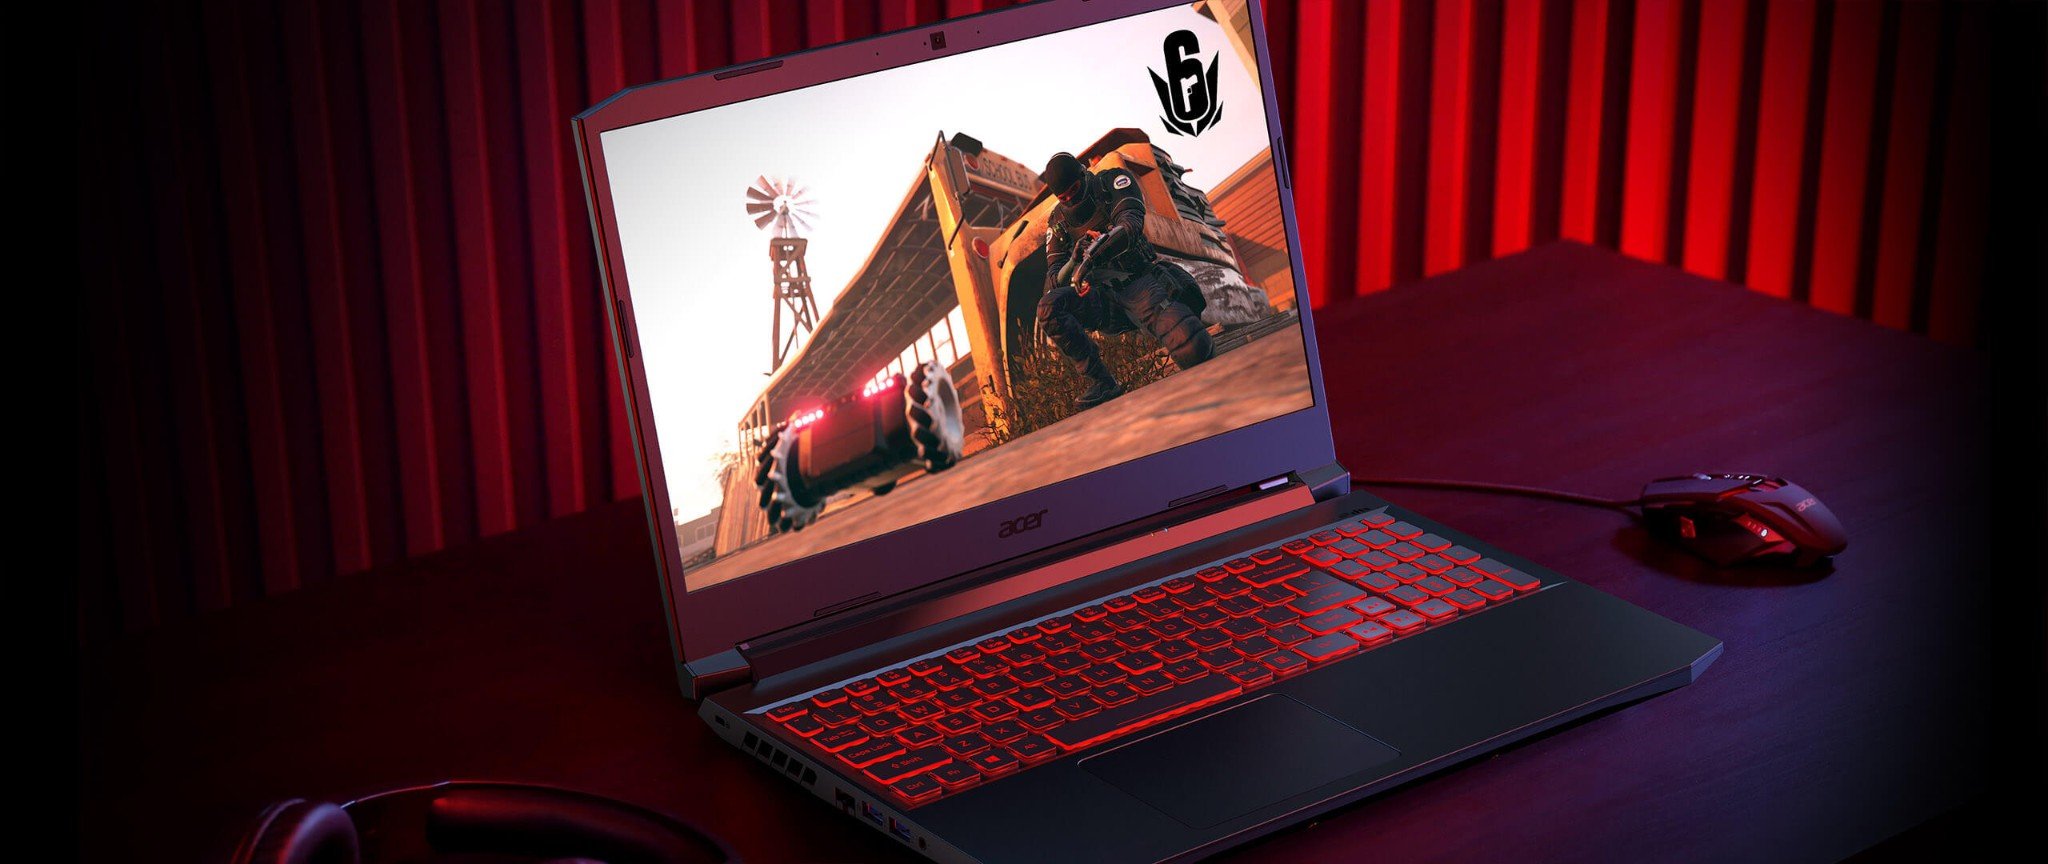 Acer Nitro 5: Thiết kế đậm chất gaming - GEARVN.COM